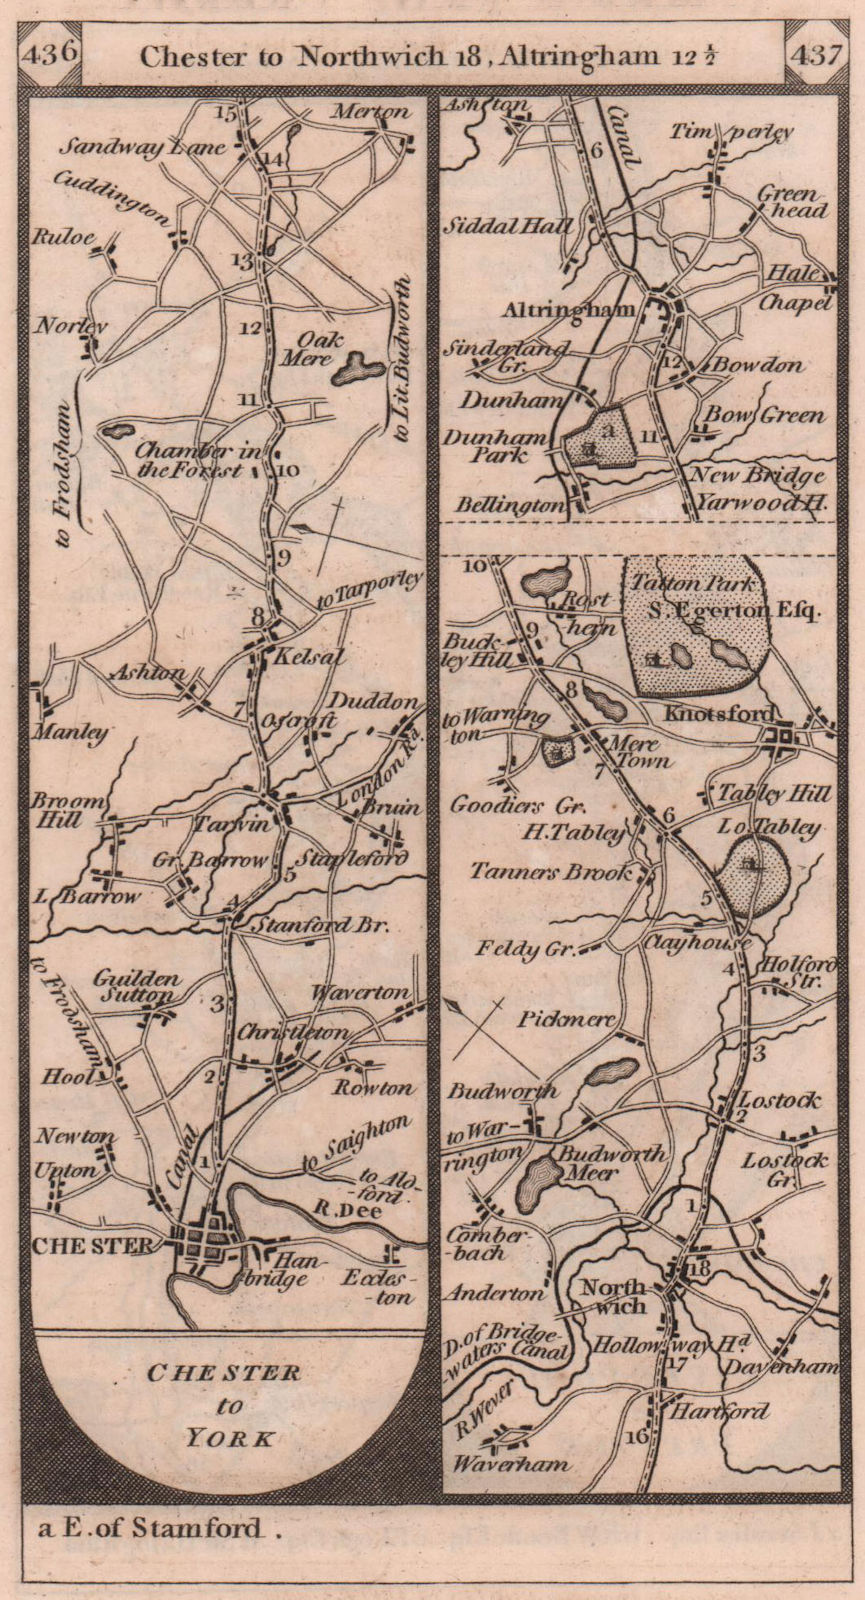 Chester - Northwich - Knutsford - Altrincham road strip map PATERSON 1803